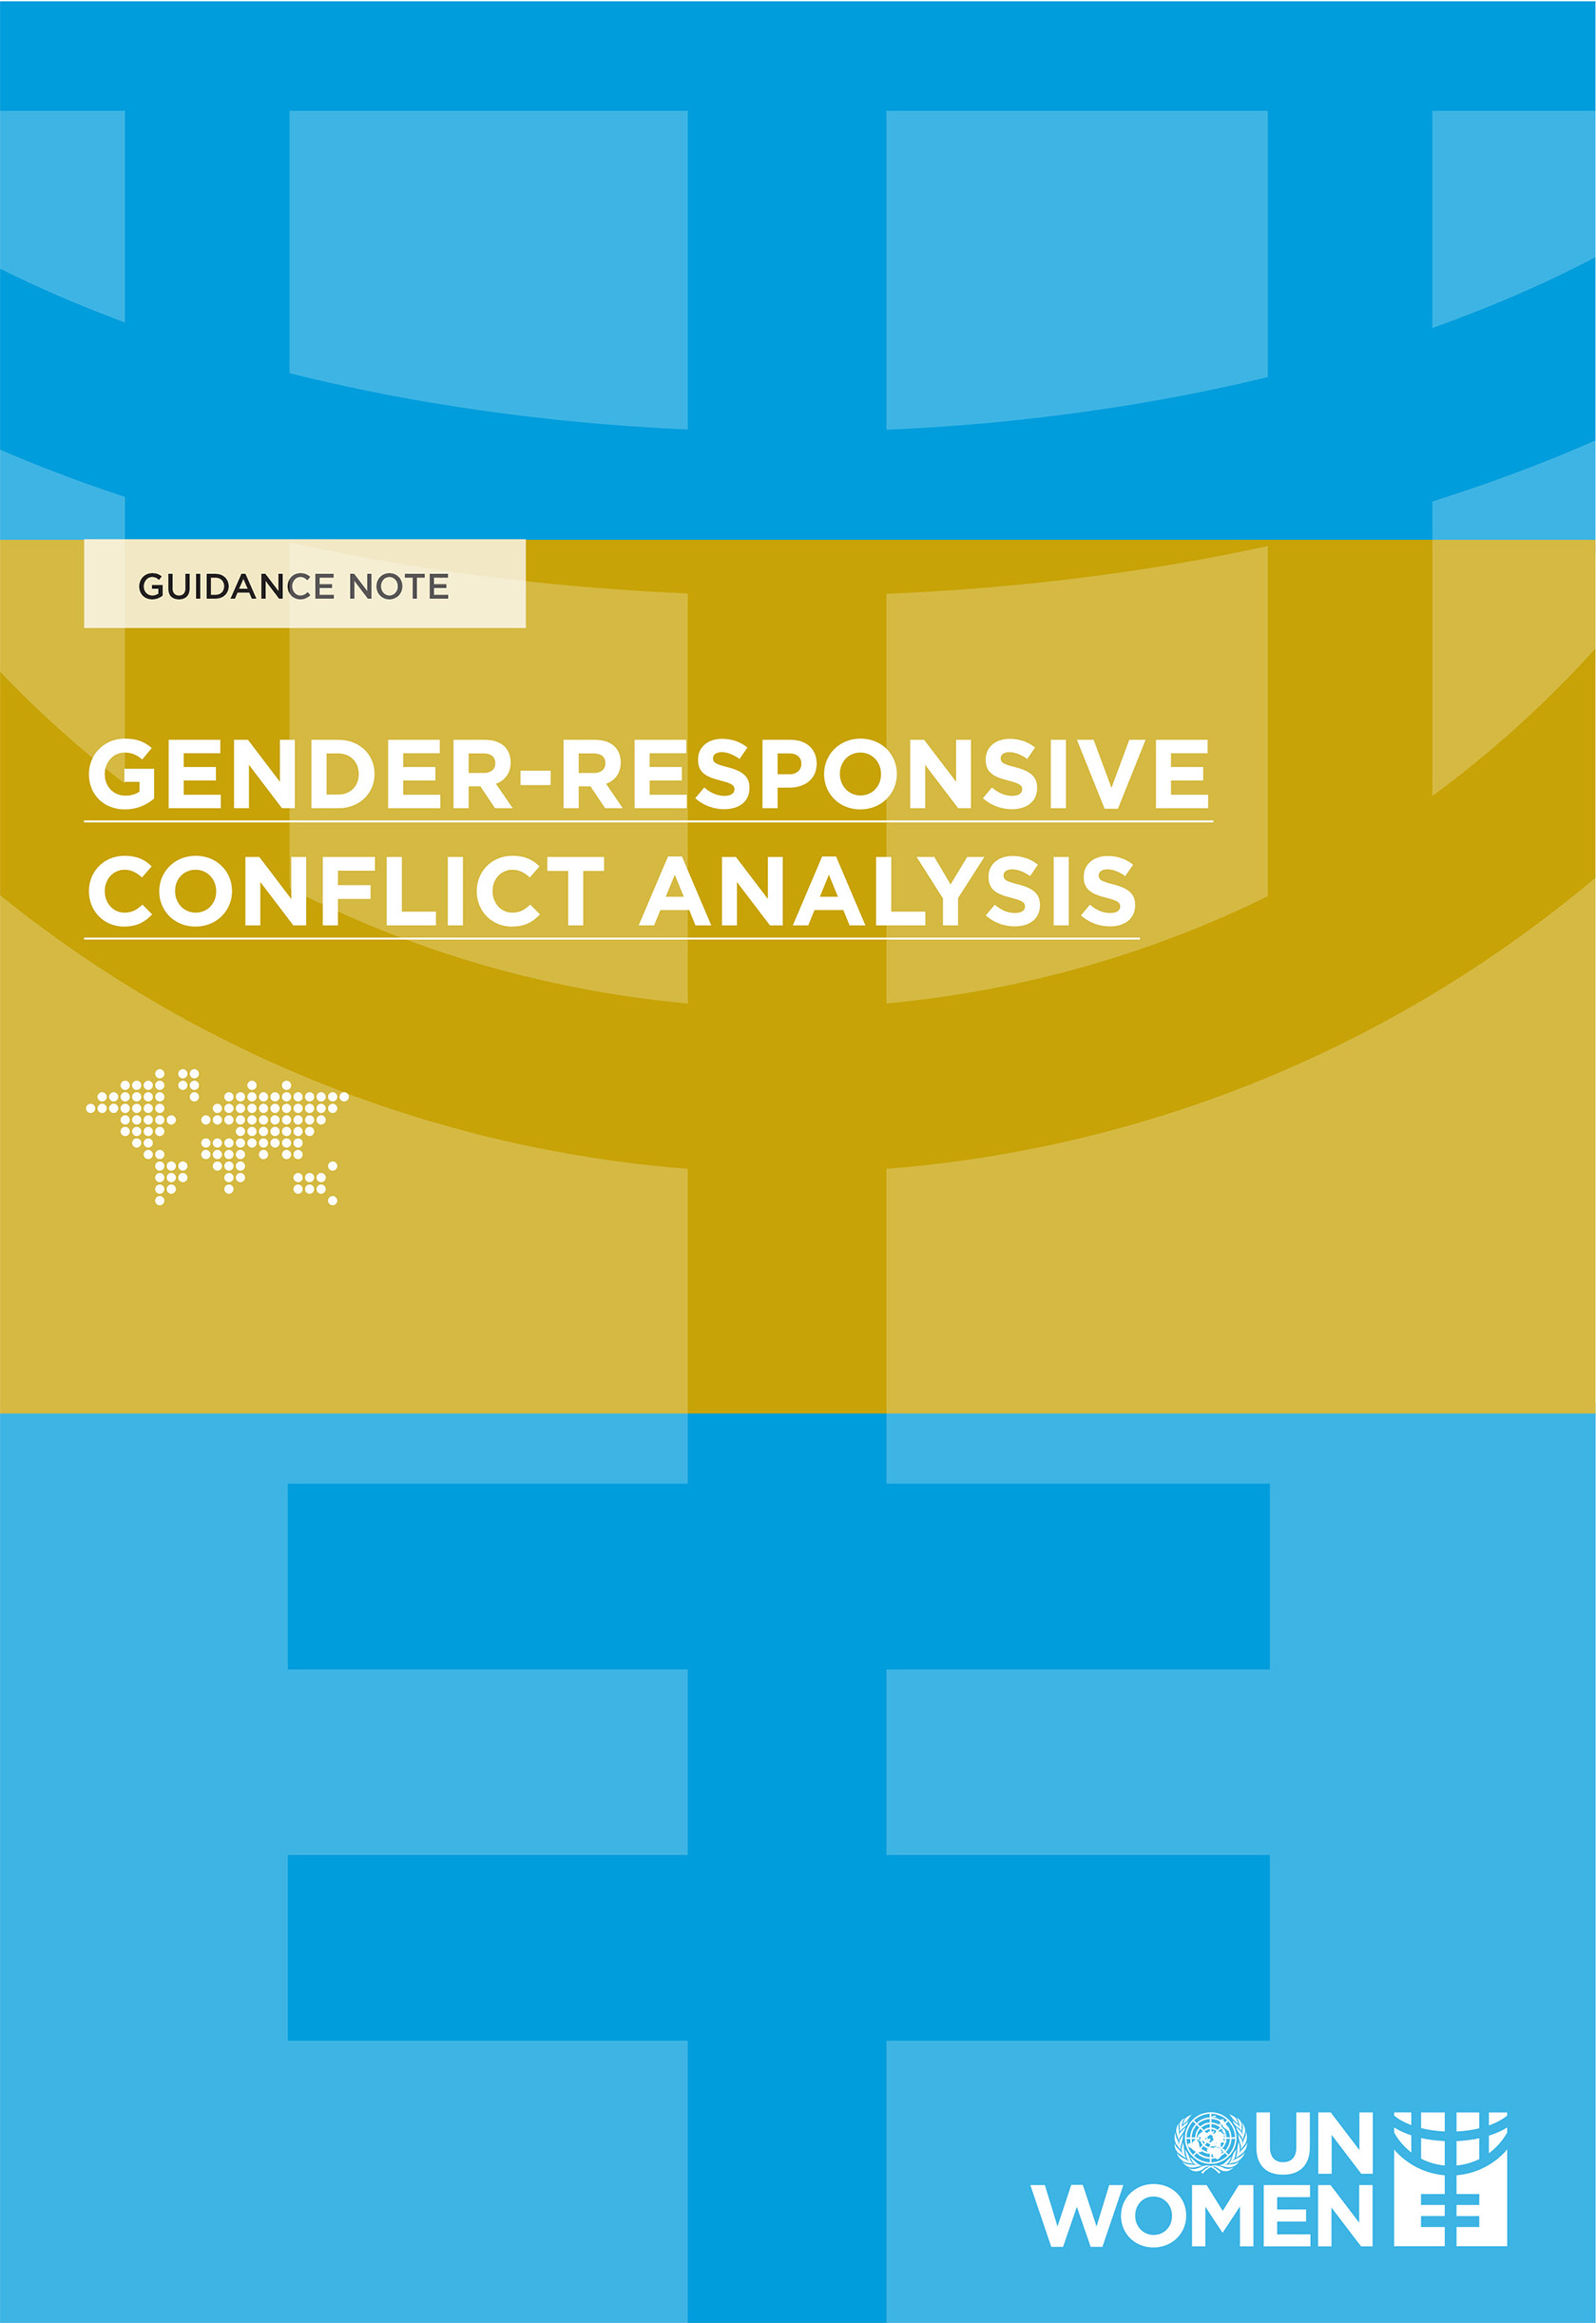 Gender-responsive conflict analysis